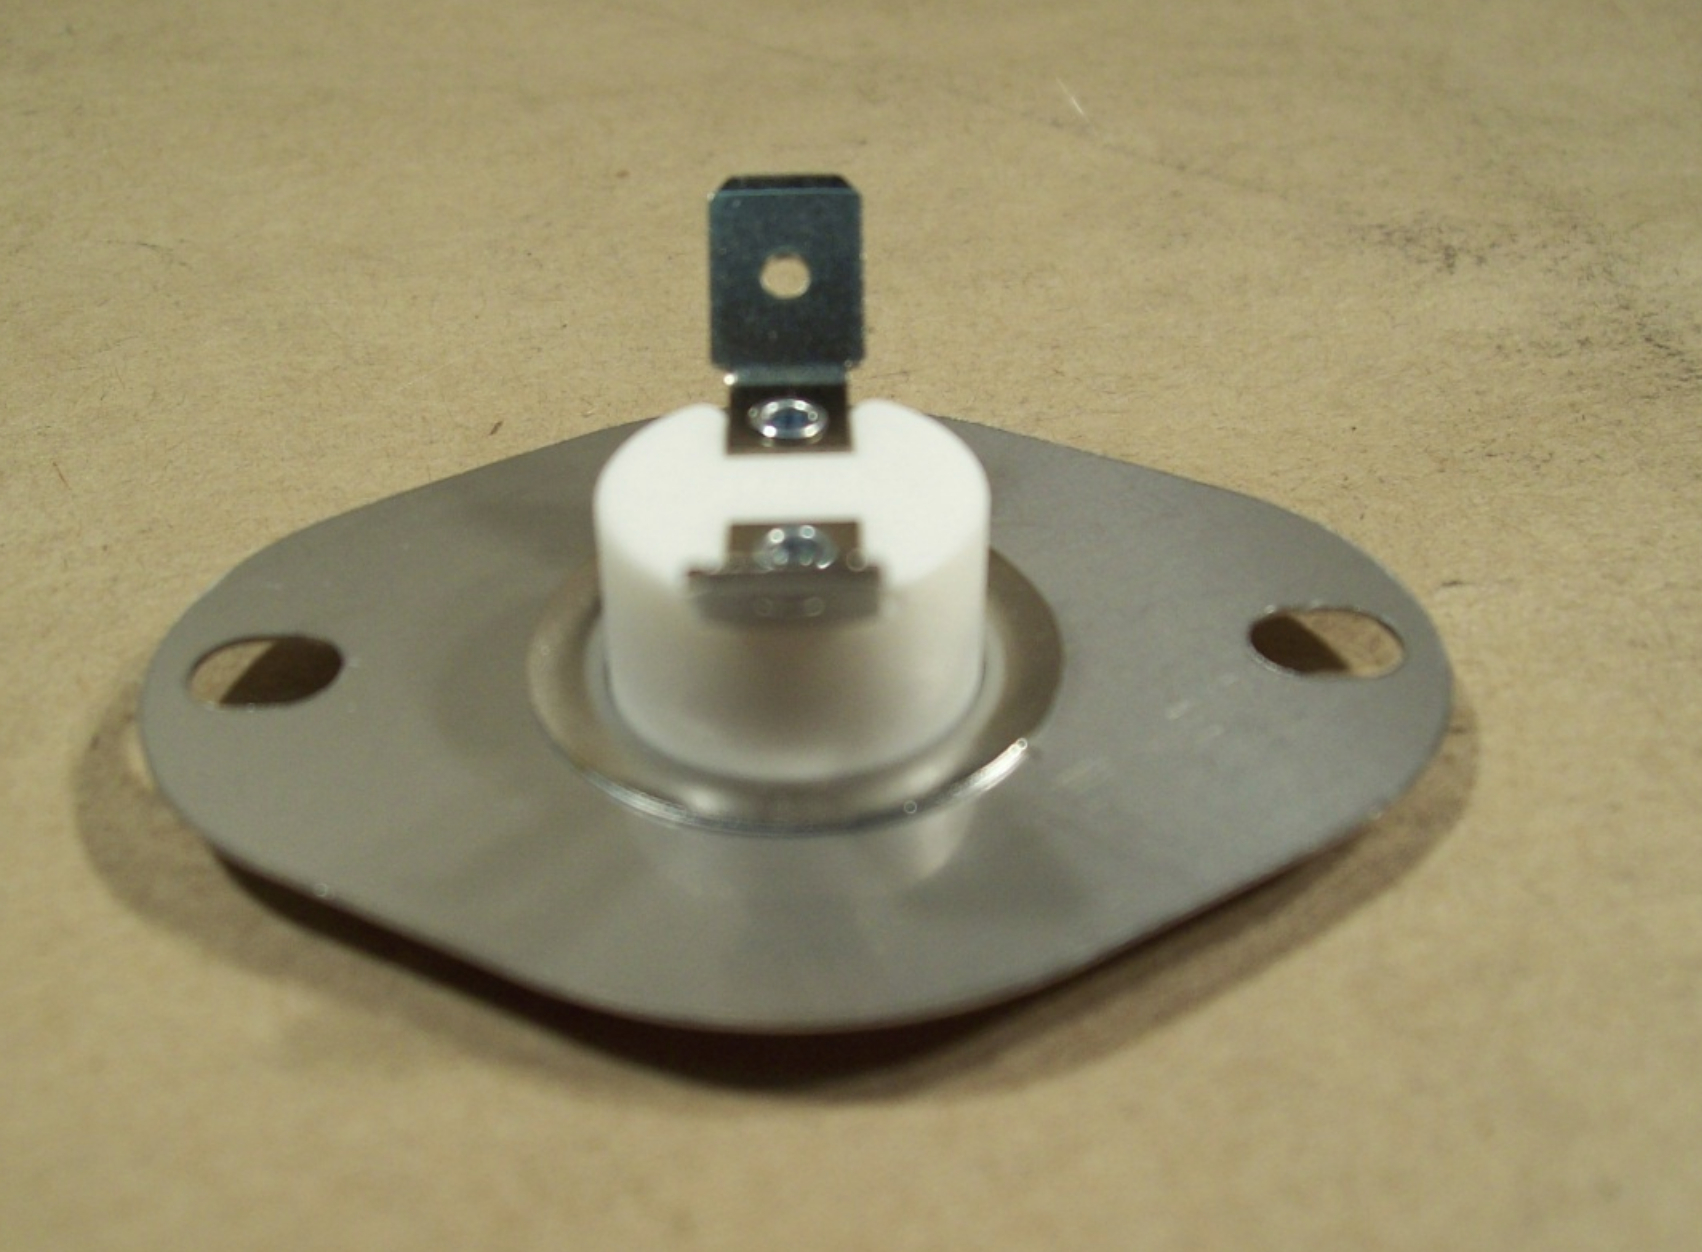 Enviro Ceramic Fan Sensor Ec 001 intended for size 1702 X 1252